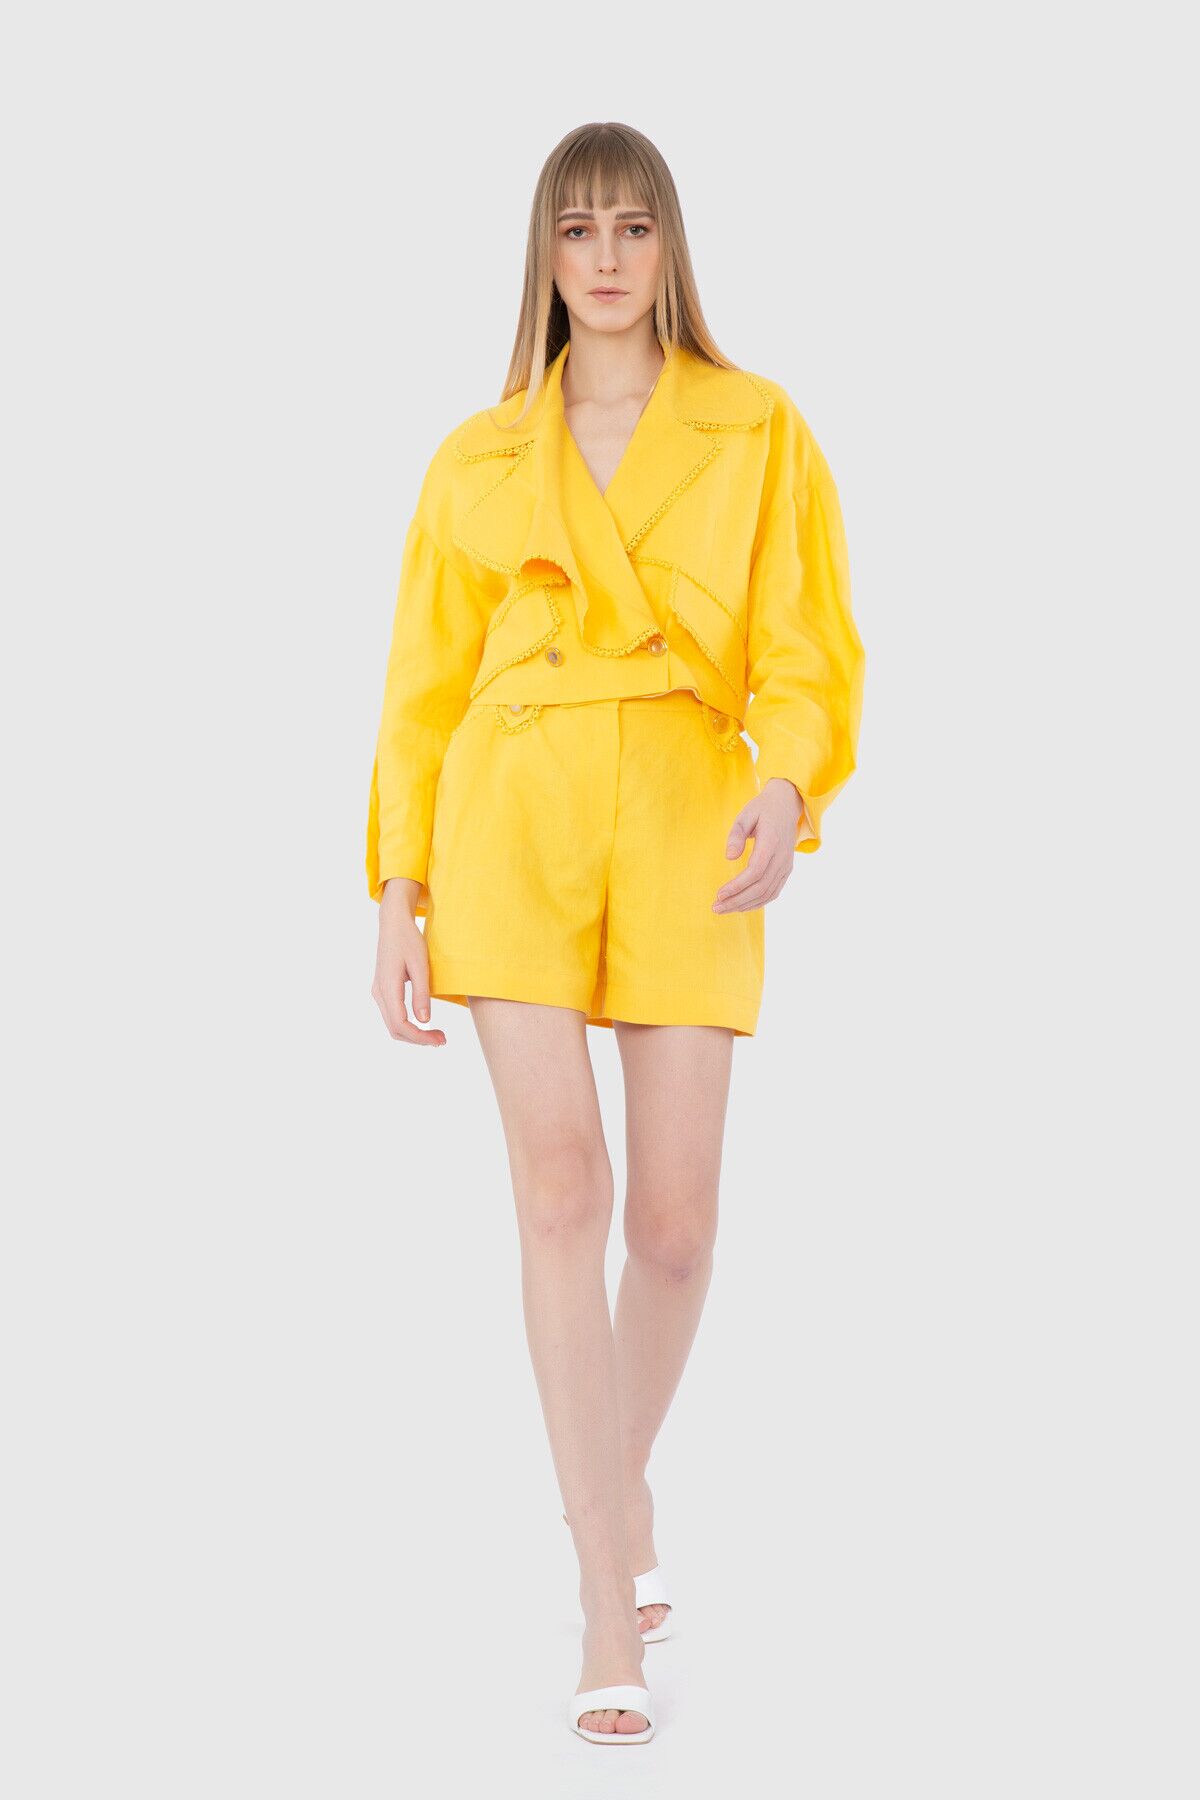  GIZIA - Lace Detailed Yellow Shorts